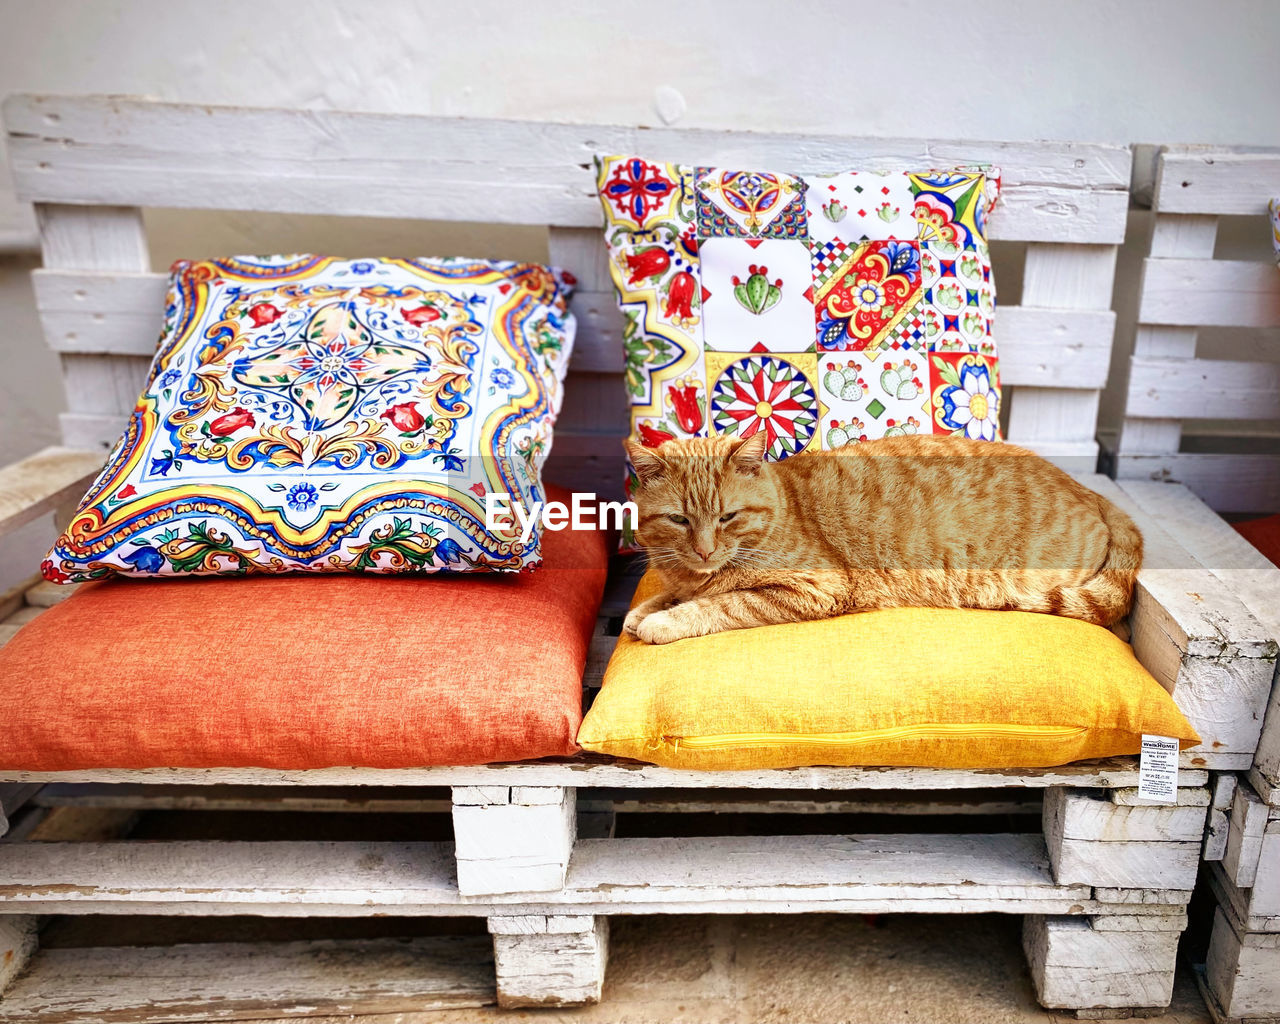 Red cat lies on decorative pillows